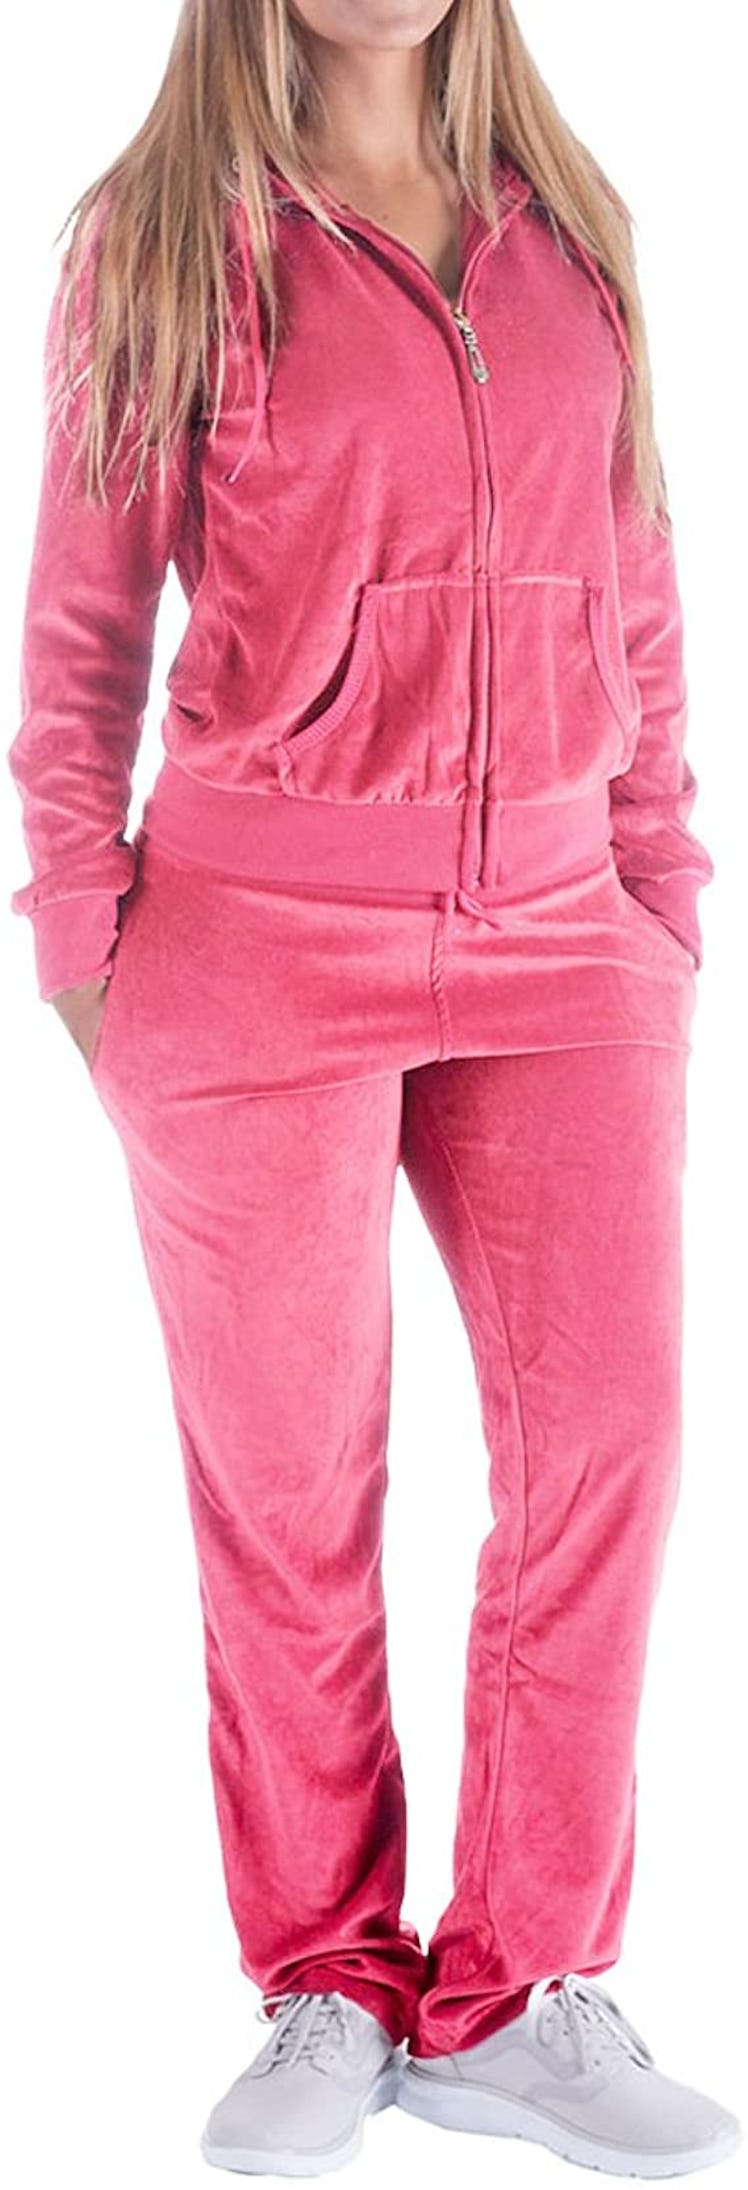 Facitisu Store Sweatsuits for Women Tracksuit 2 Piece Outfits Velour & Fleece Active Wear